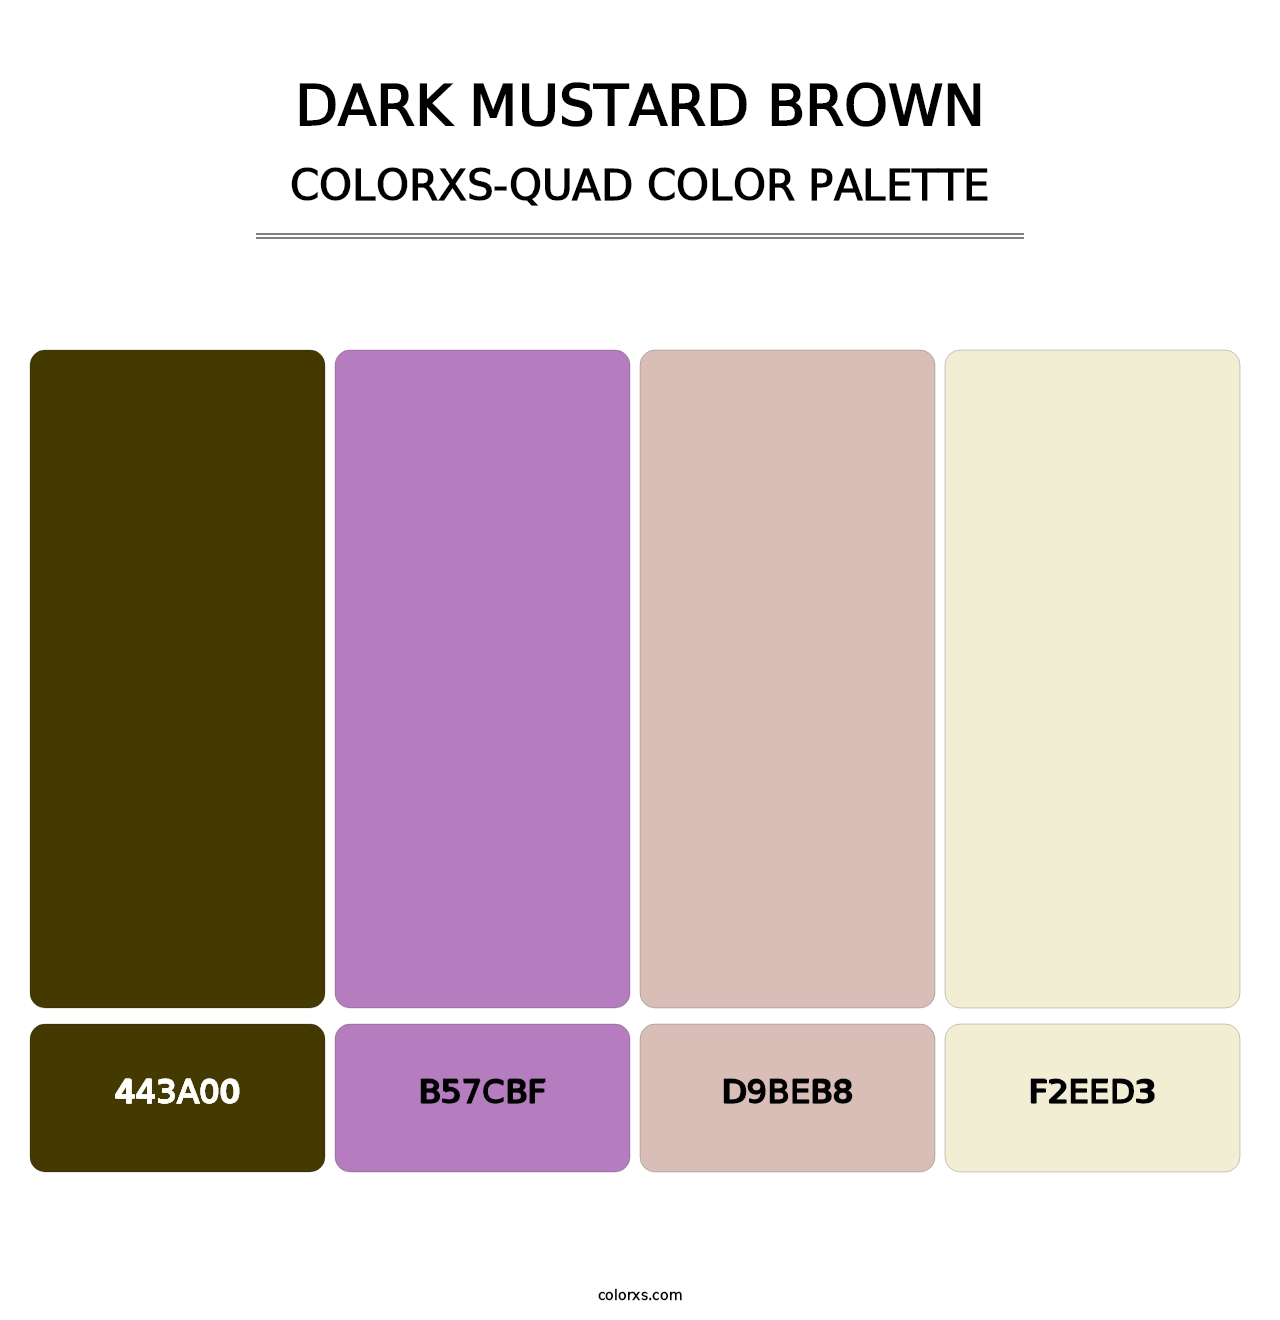 Dark Mustard Brown - Colorxs Quad Palette